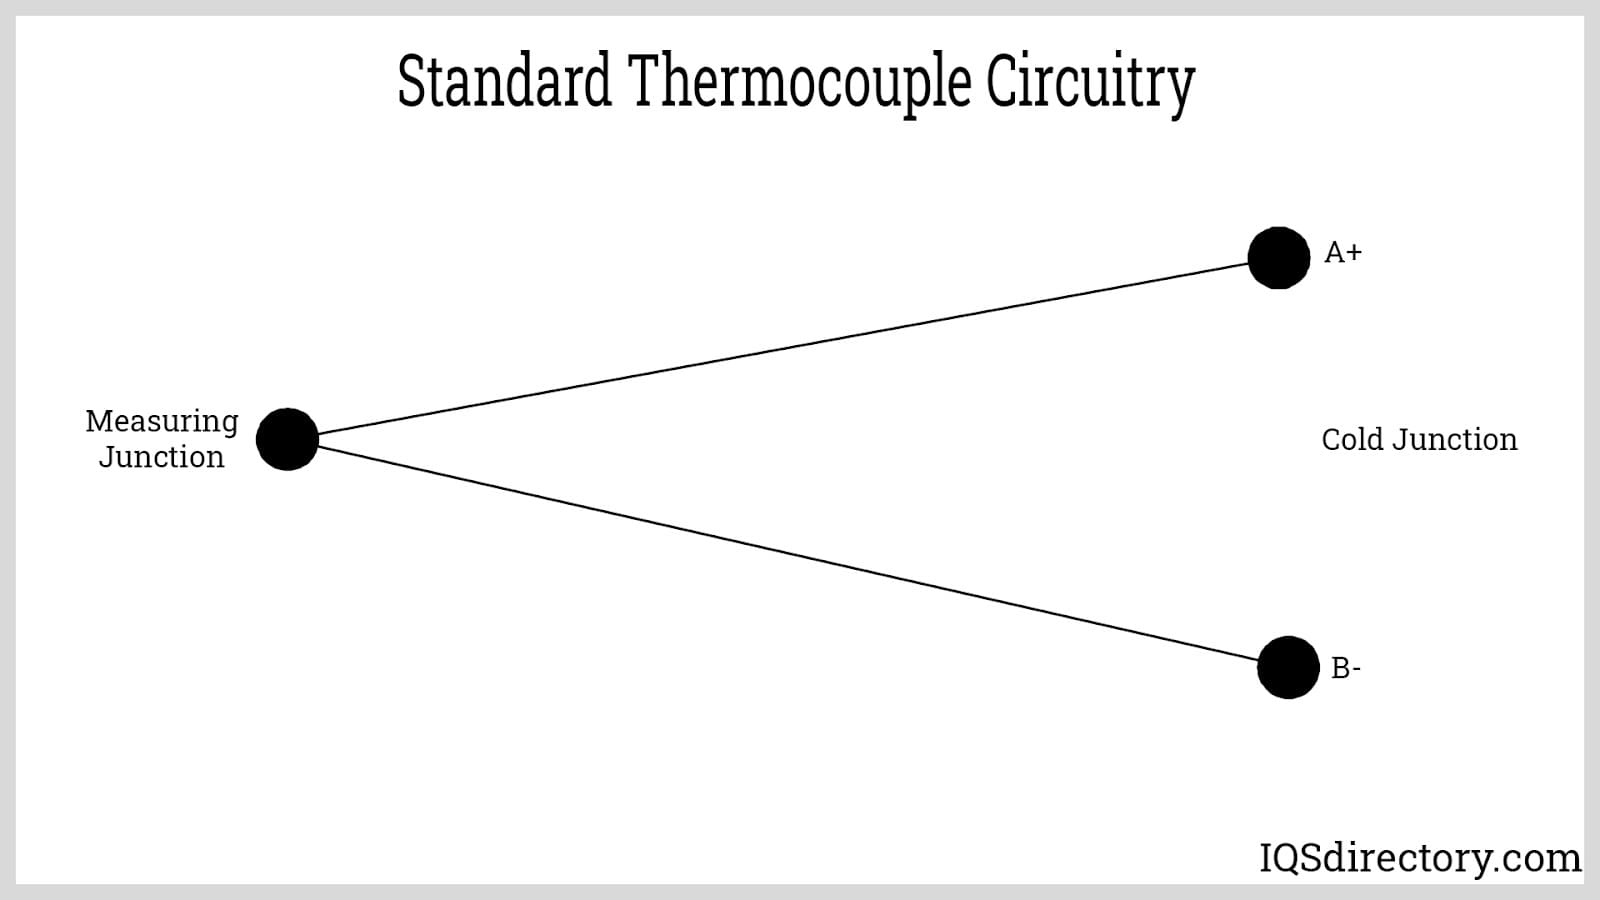 Standard Thermocouple Circuitry